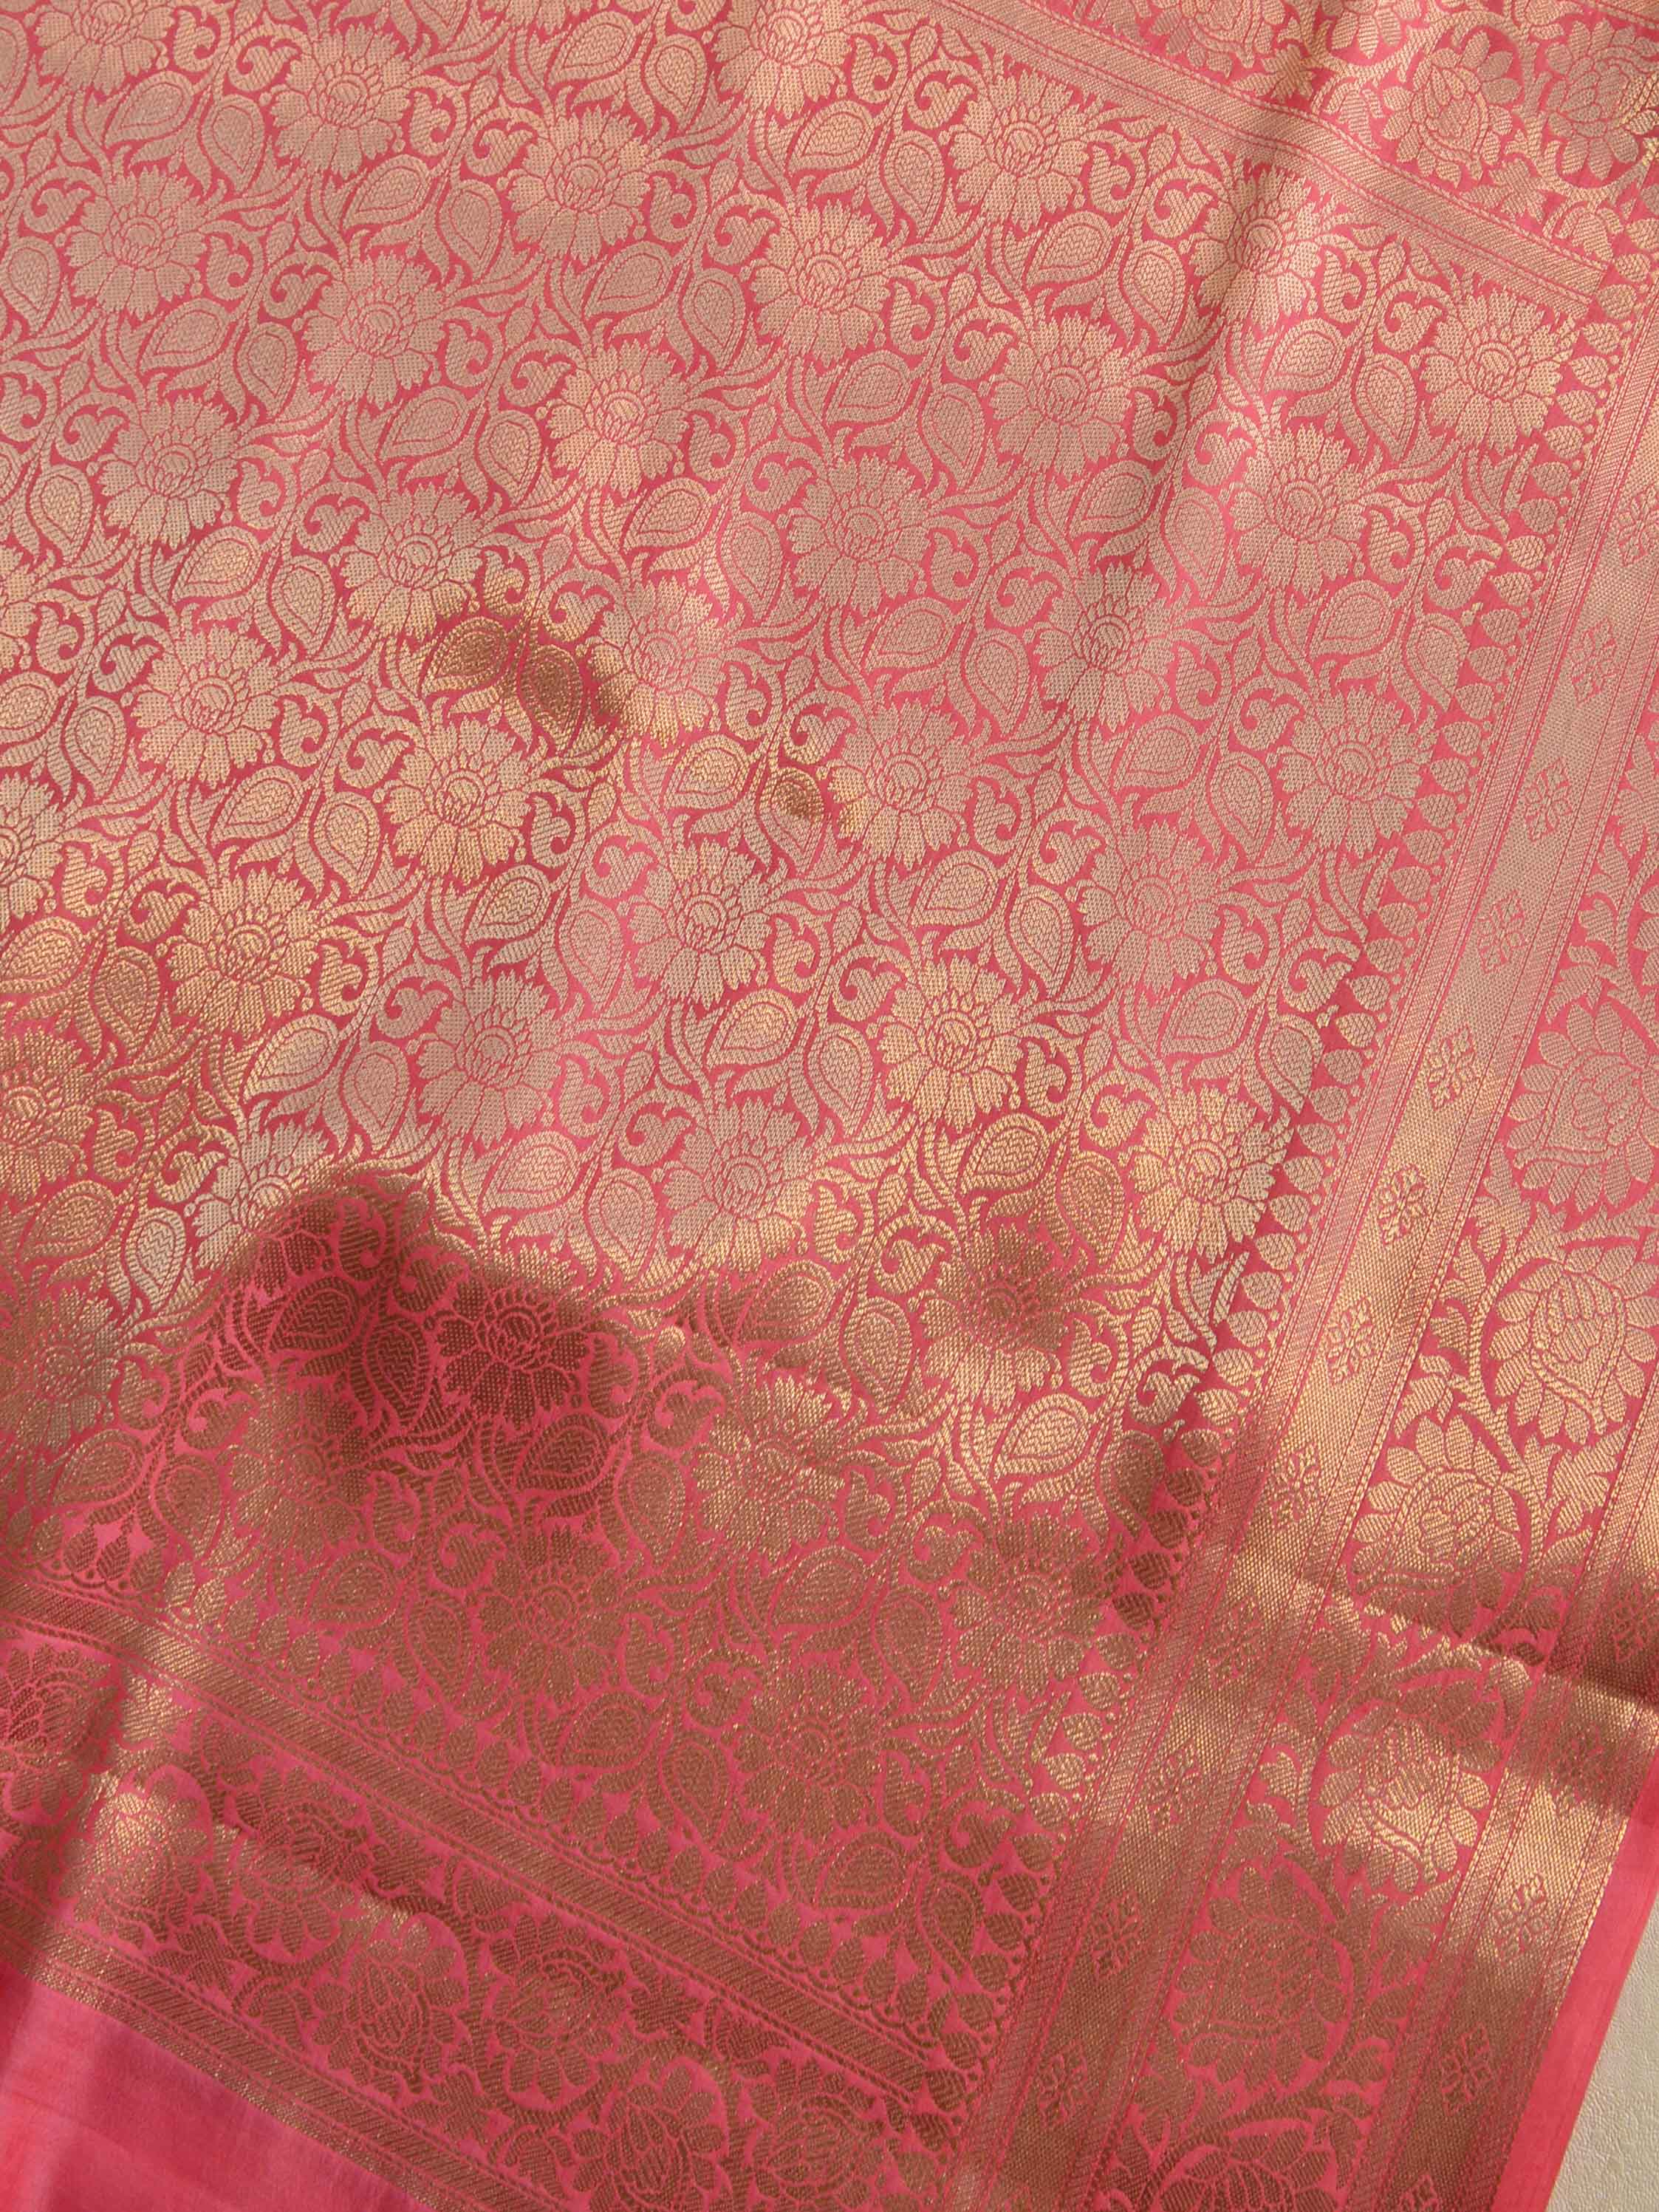 Banarasee Handloom Pure Chiniya Silk Saree With Zari Border Work-Rose Pink